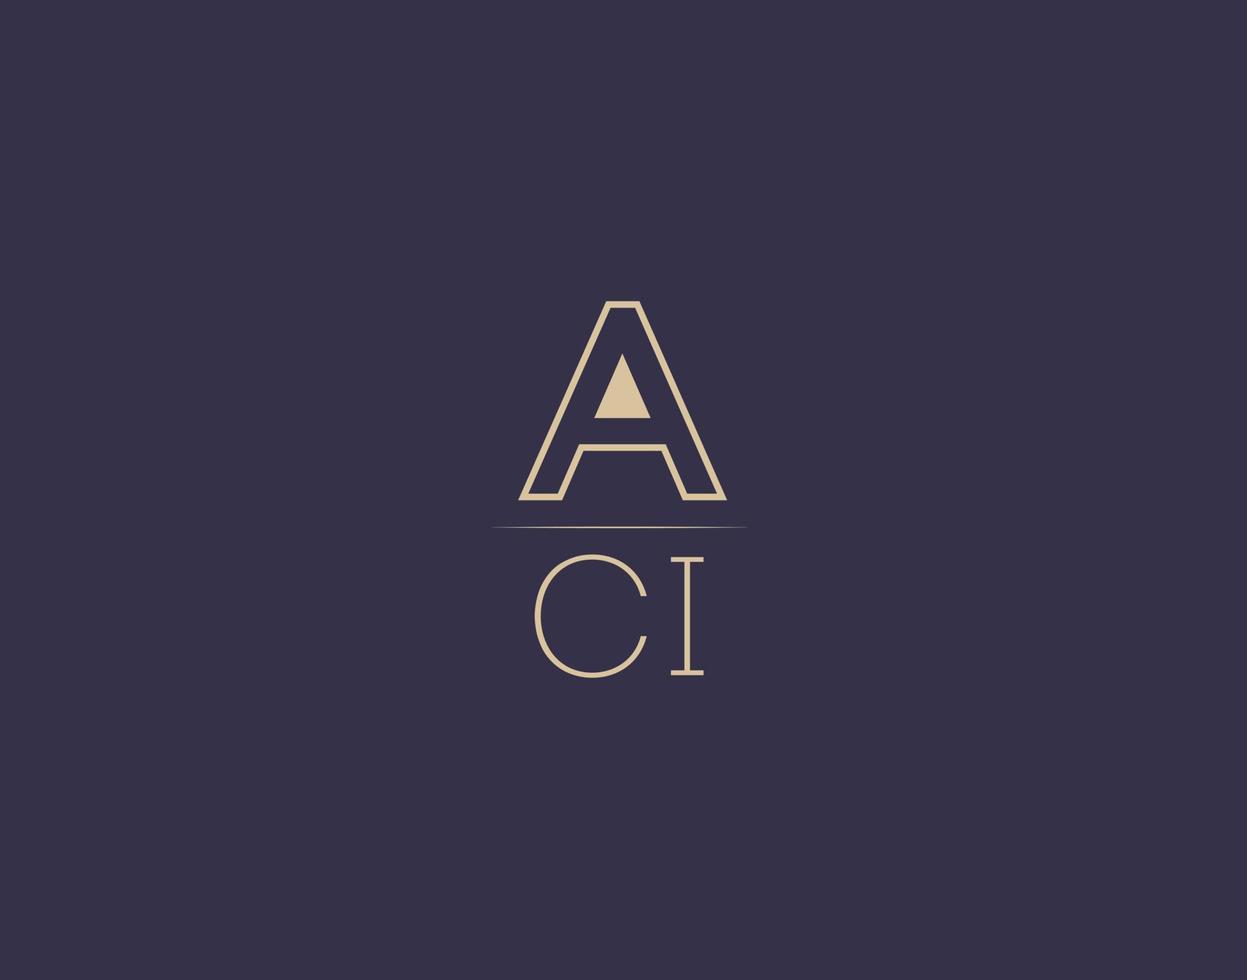 aci brev logotyp design modern minimalistisk vektor bilder